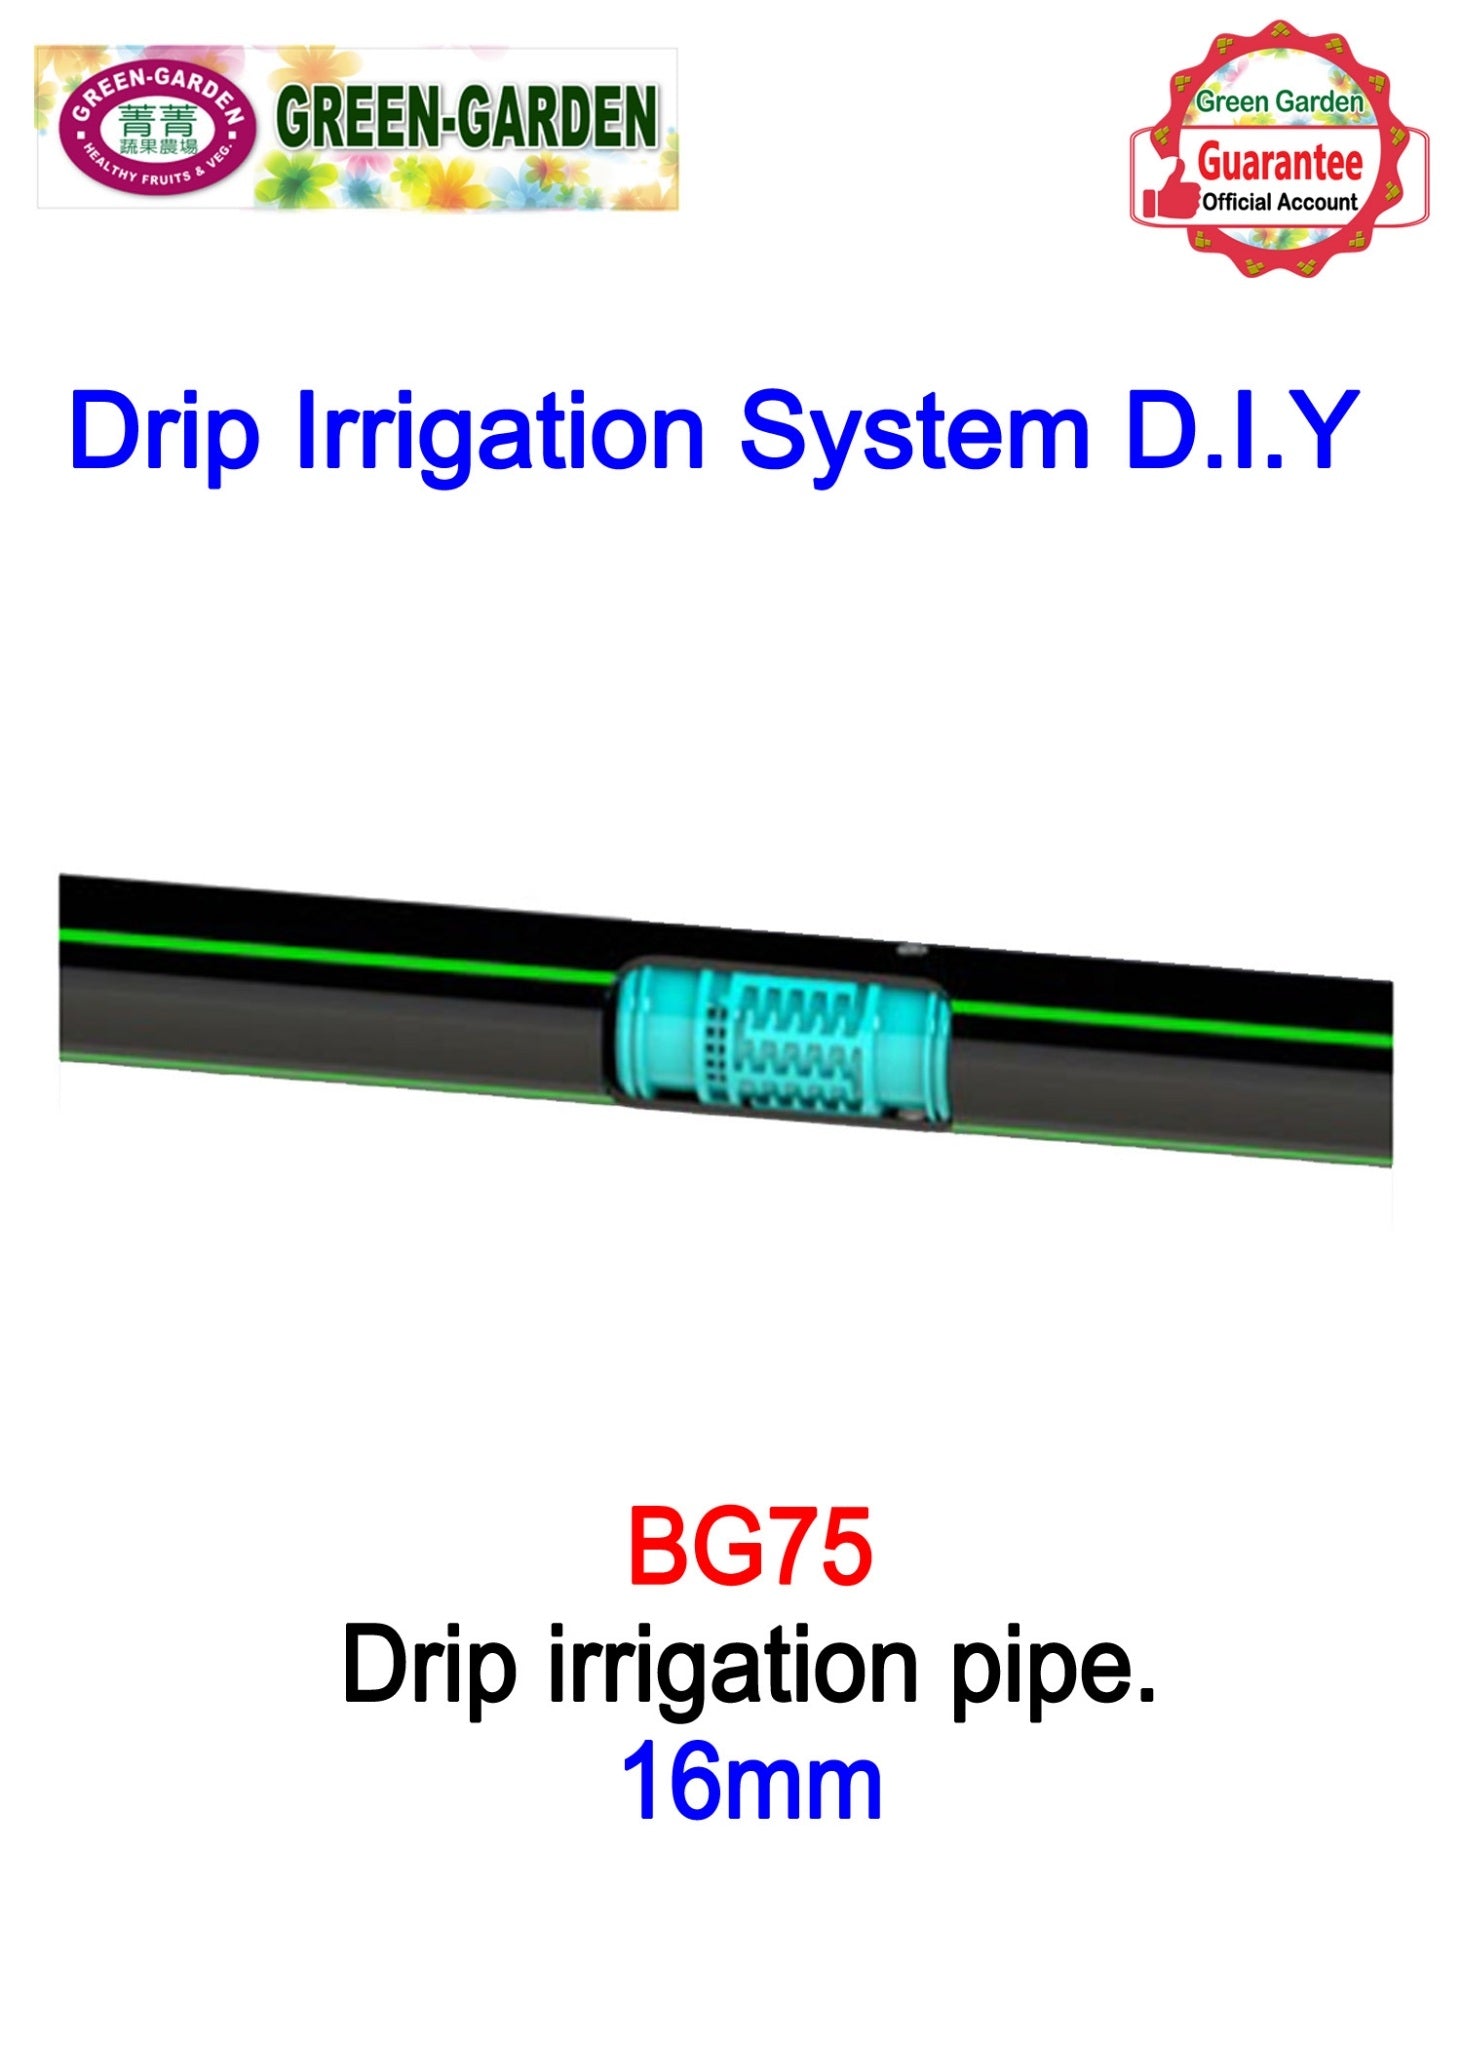 Drip Irrigation System - 16mm drip irrigation pipe  BG75